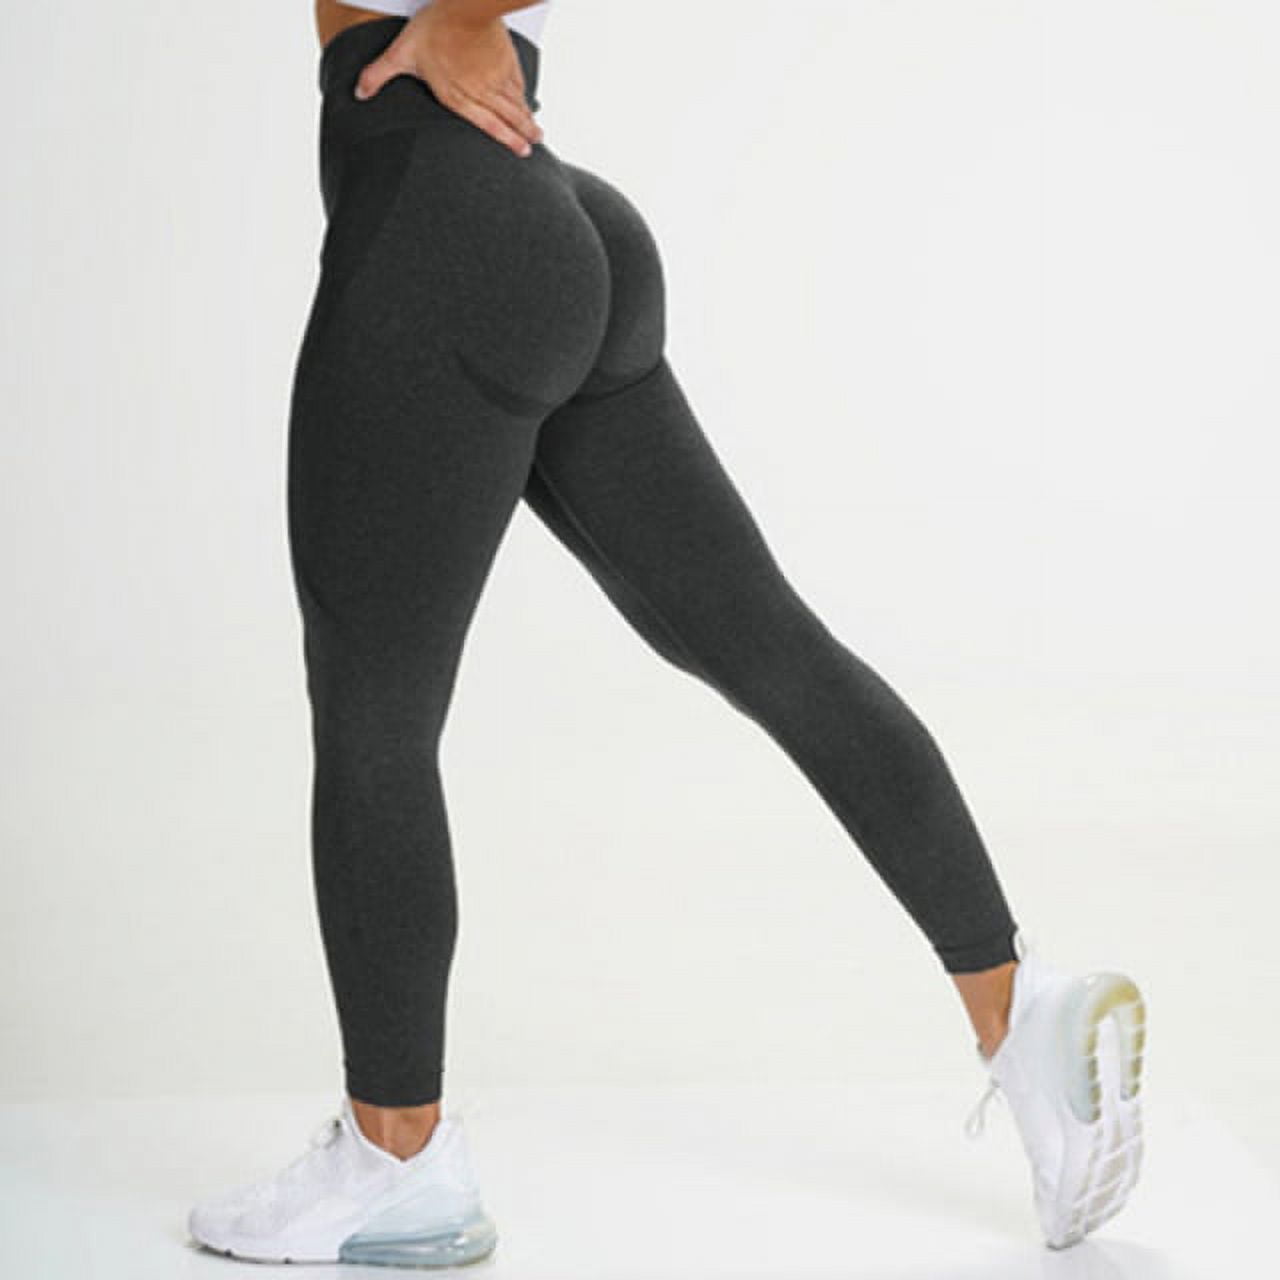 Leggings Women Yoga Pants Push Up High Waist Seamless Fitness